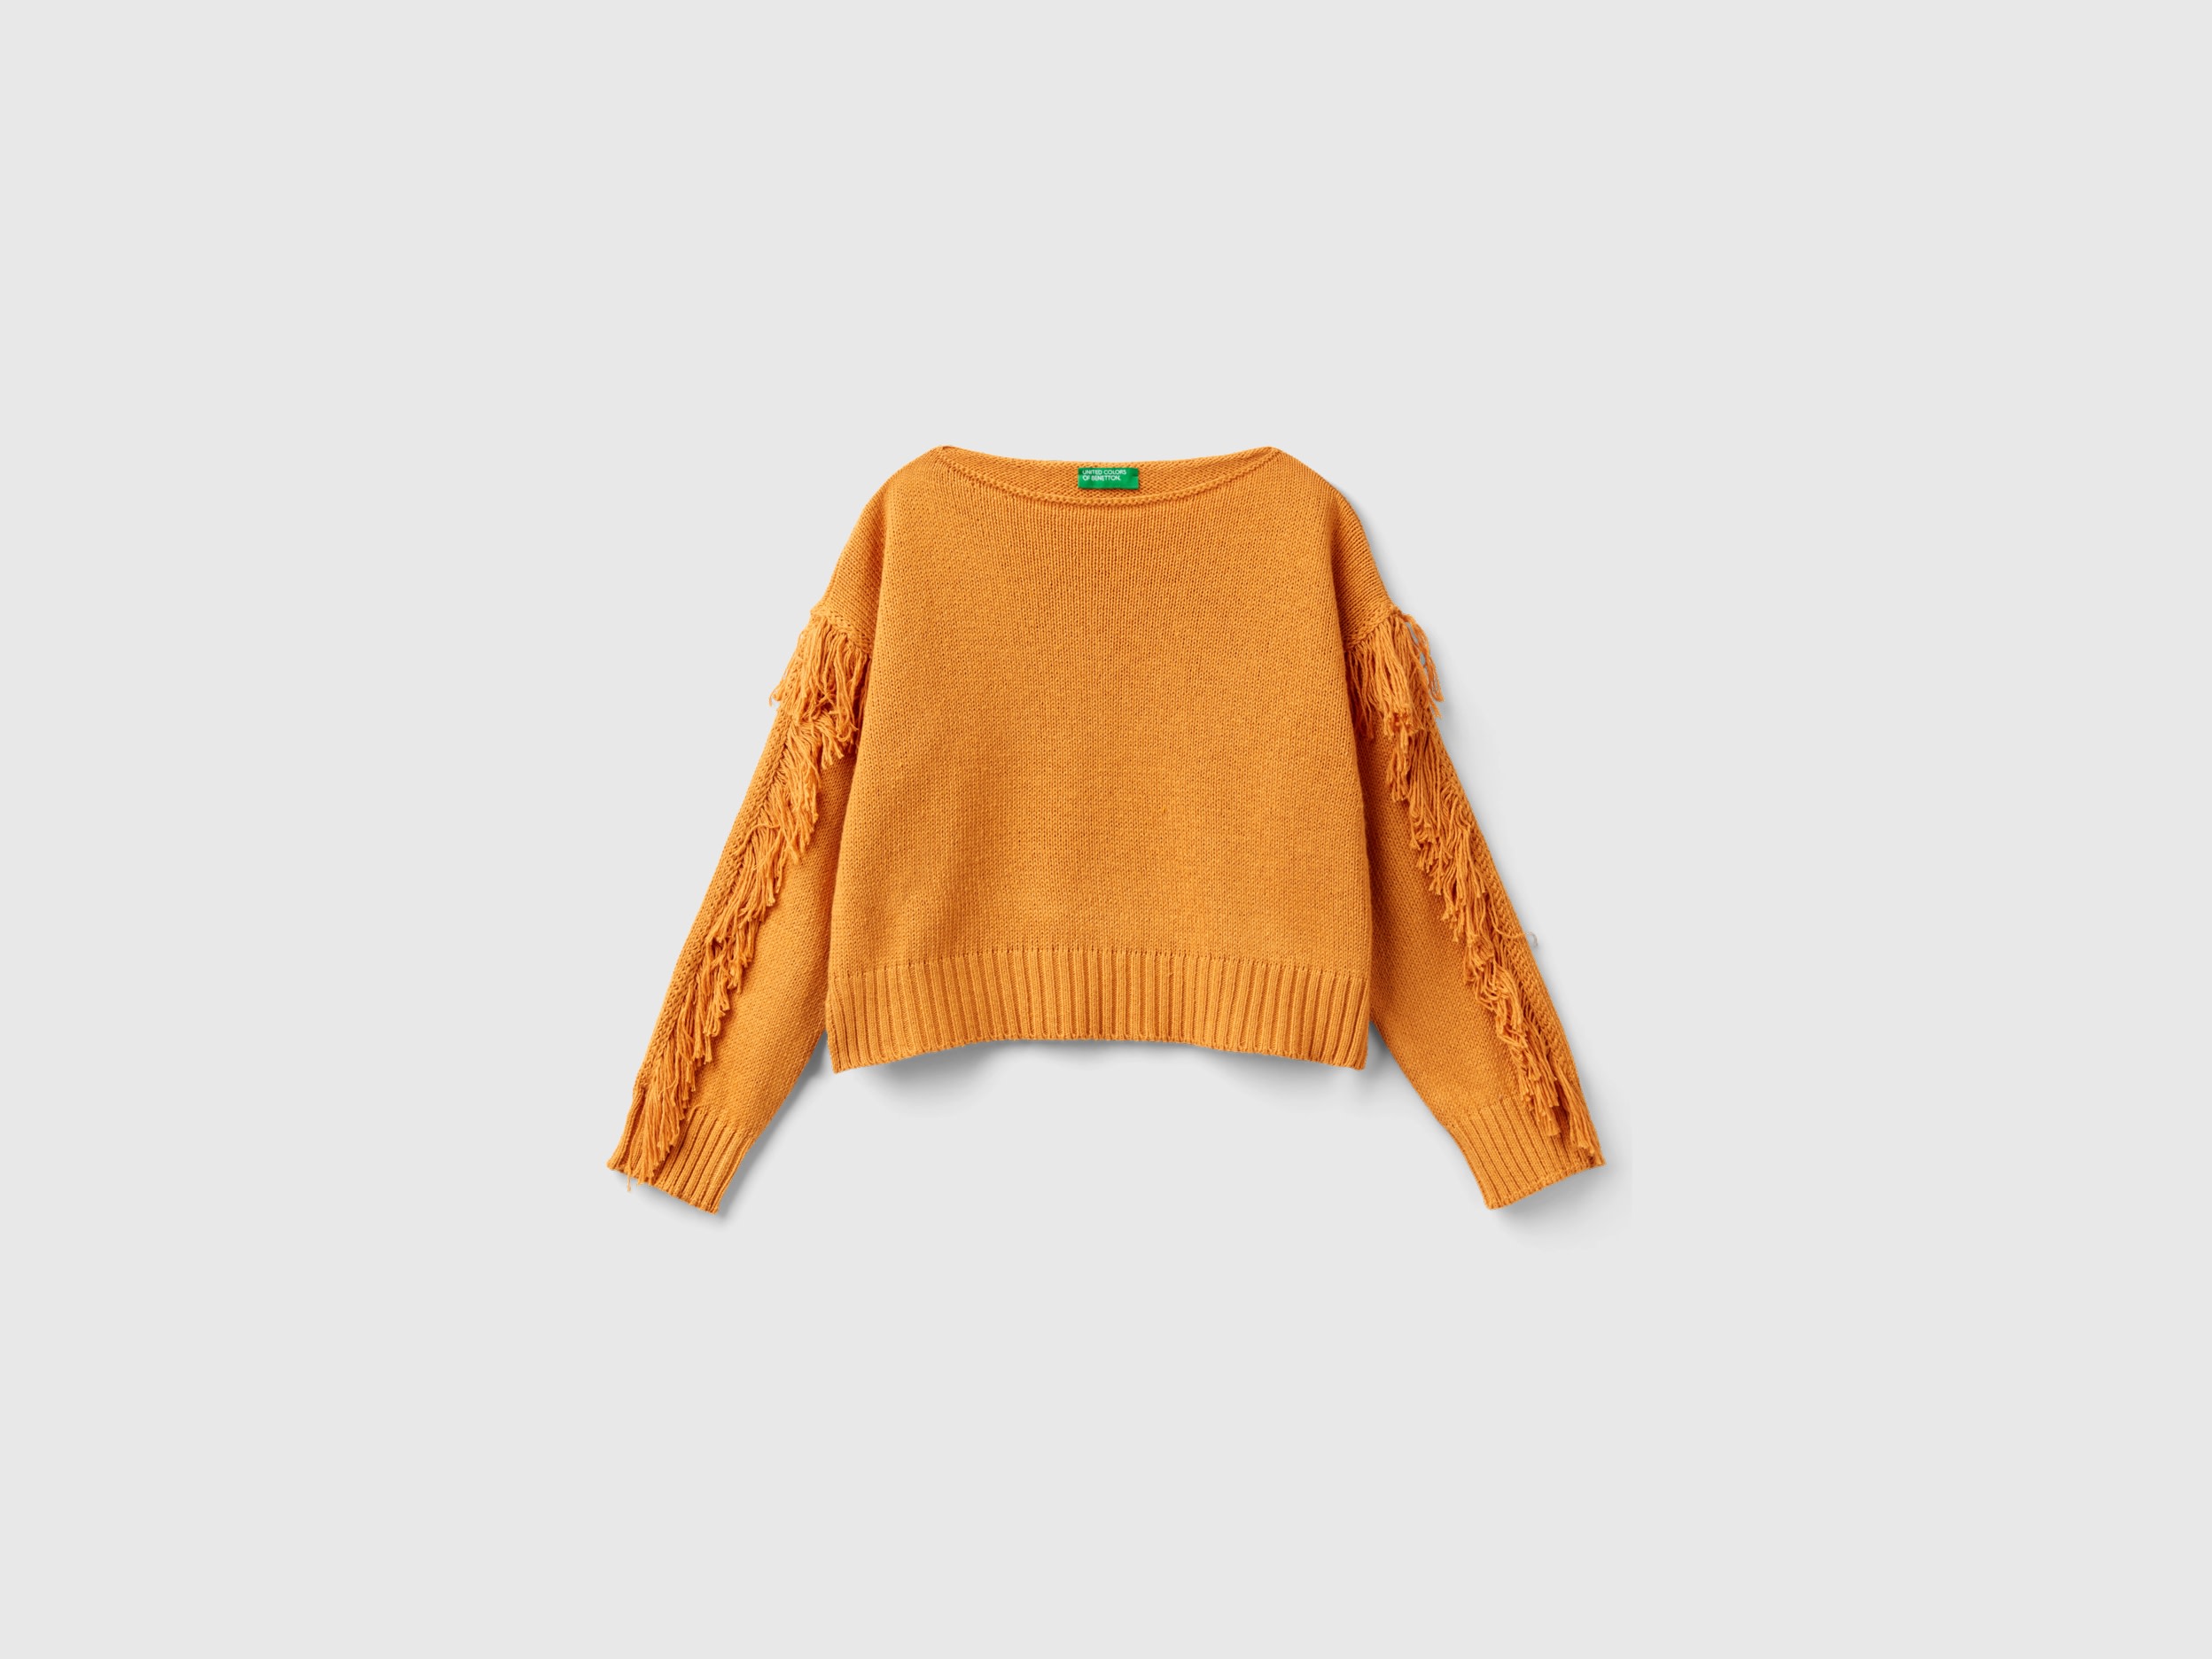 Image of Benetton, Sweater With Fringe, size 2XL, Camel, Kids